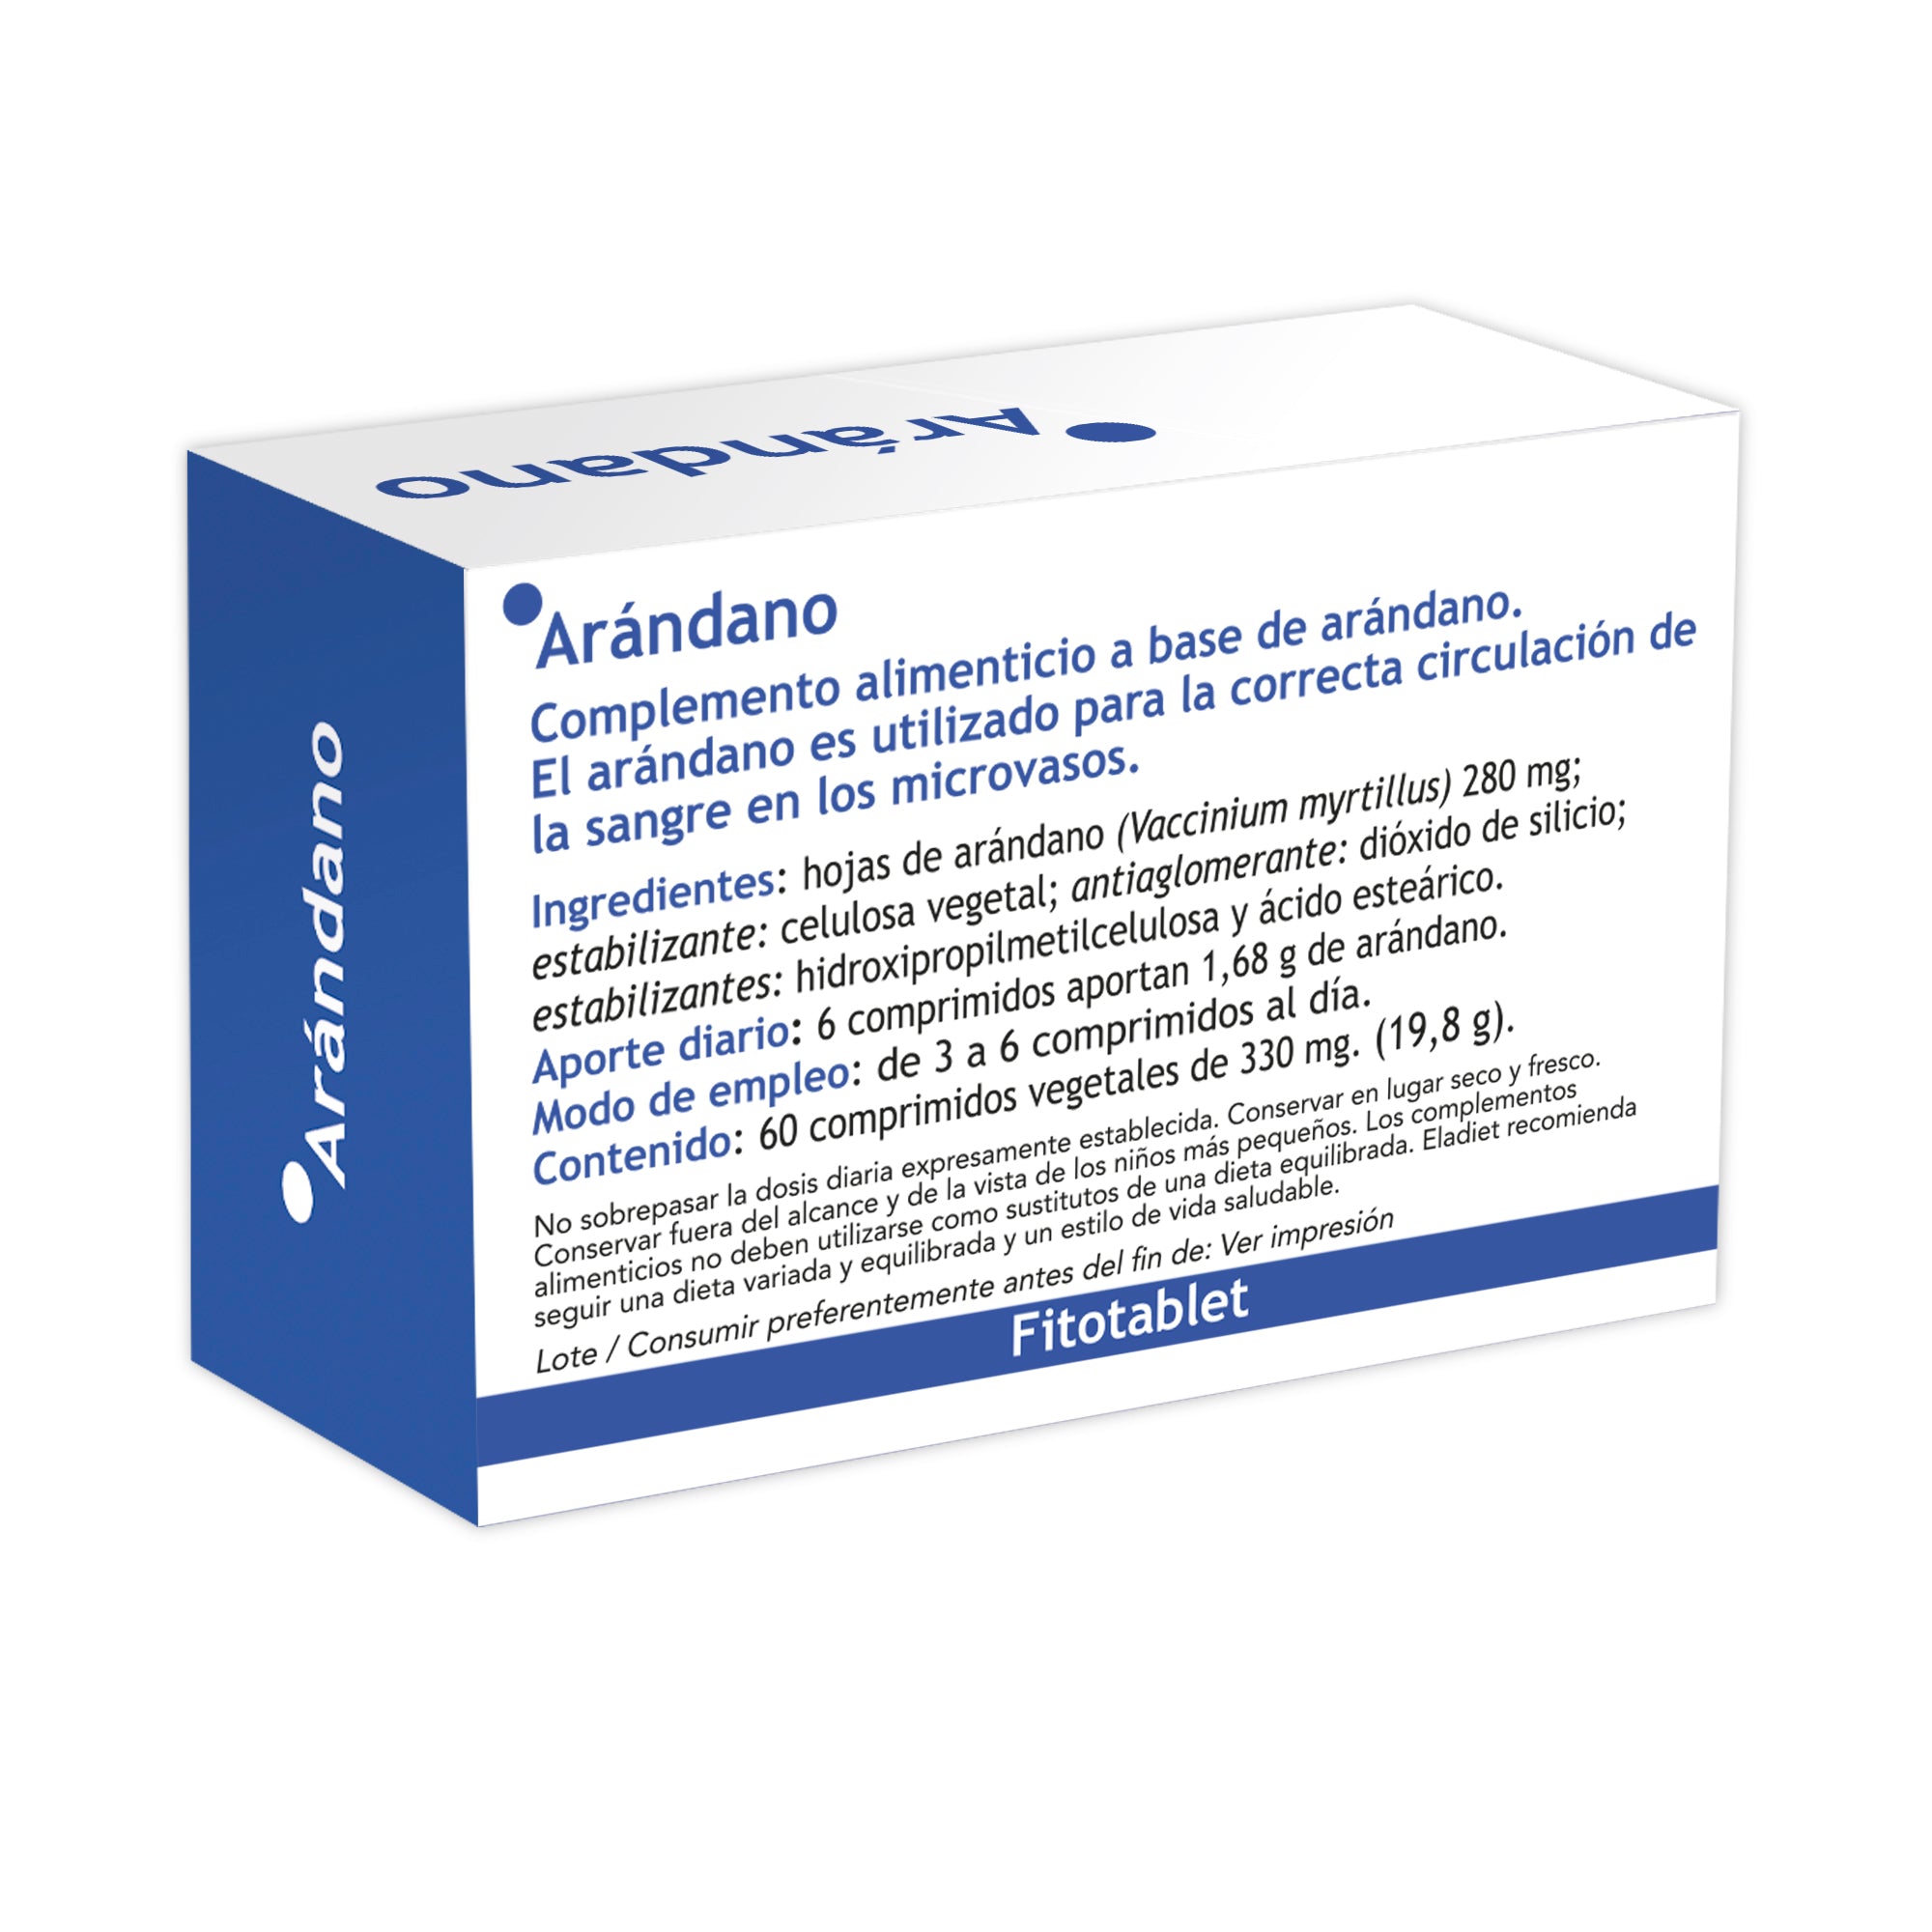 Eladiet - Fitotablet Arandano 330Mg 60 Comprimidos - Biopharmacia, Parafarmacia online